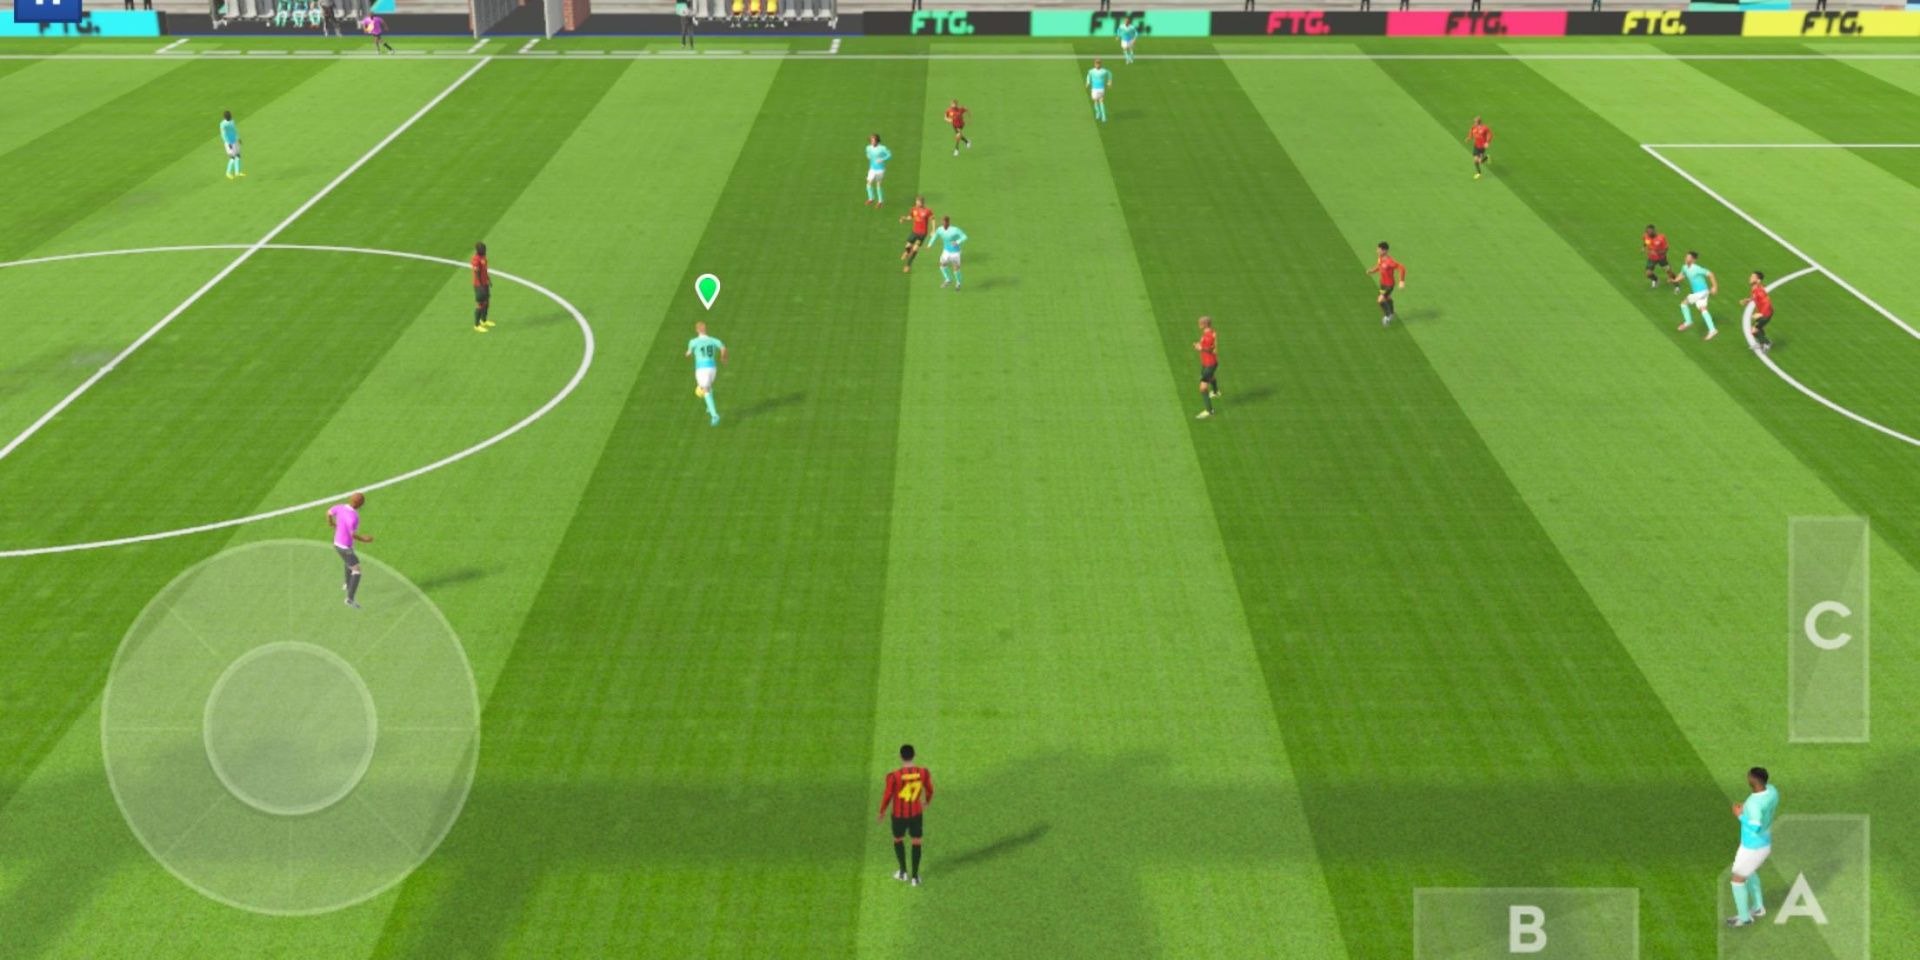 Dream Soccer League mobile screenshot.